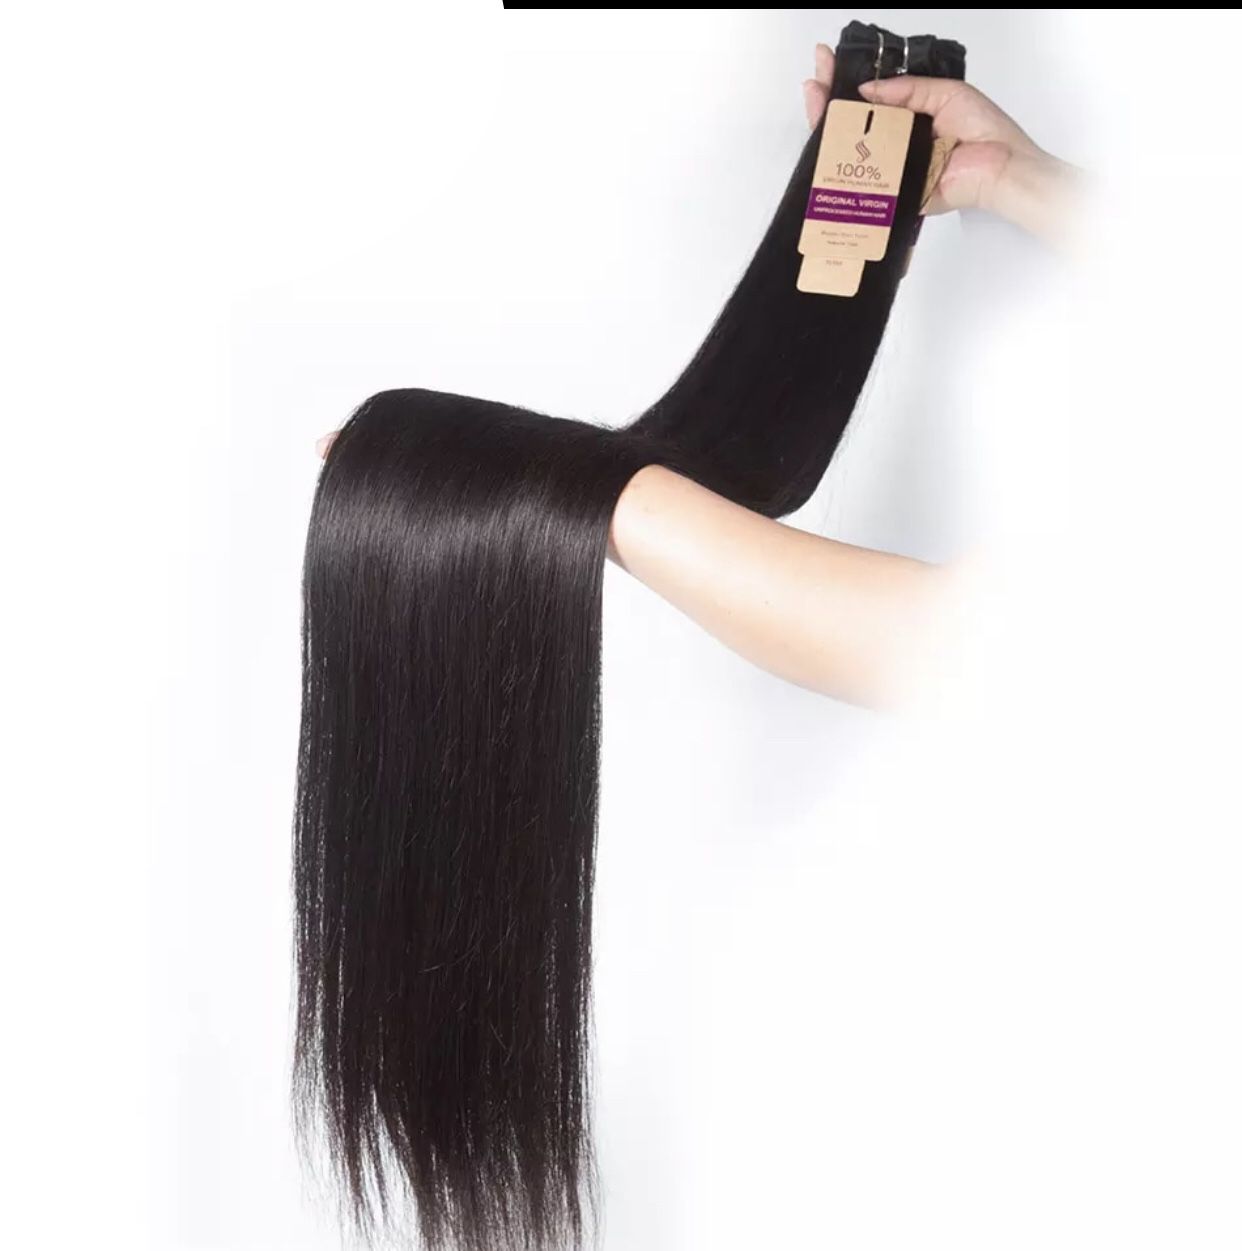 Straight human hair 30-38 inches.